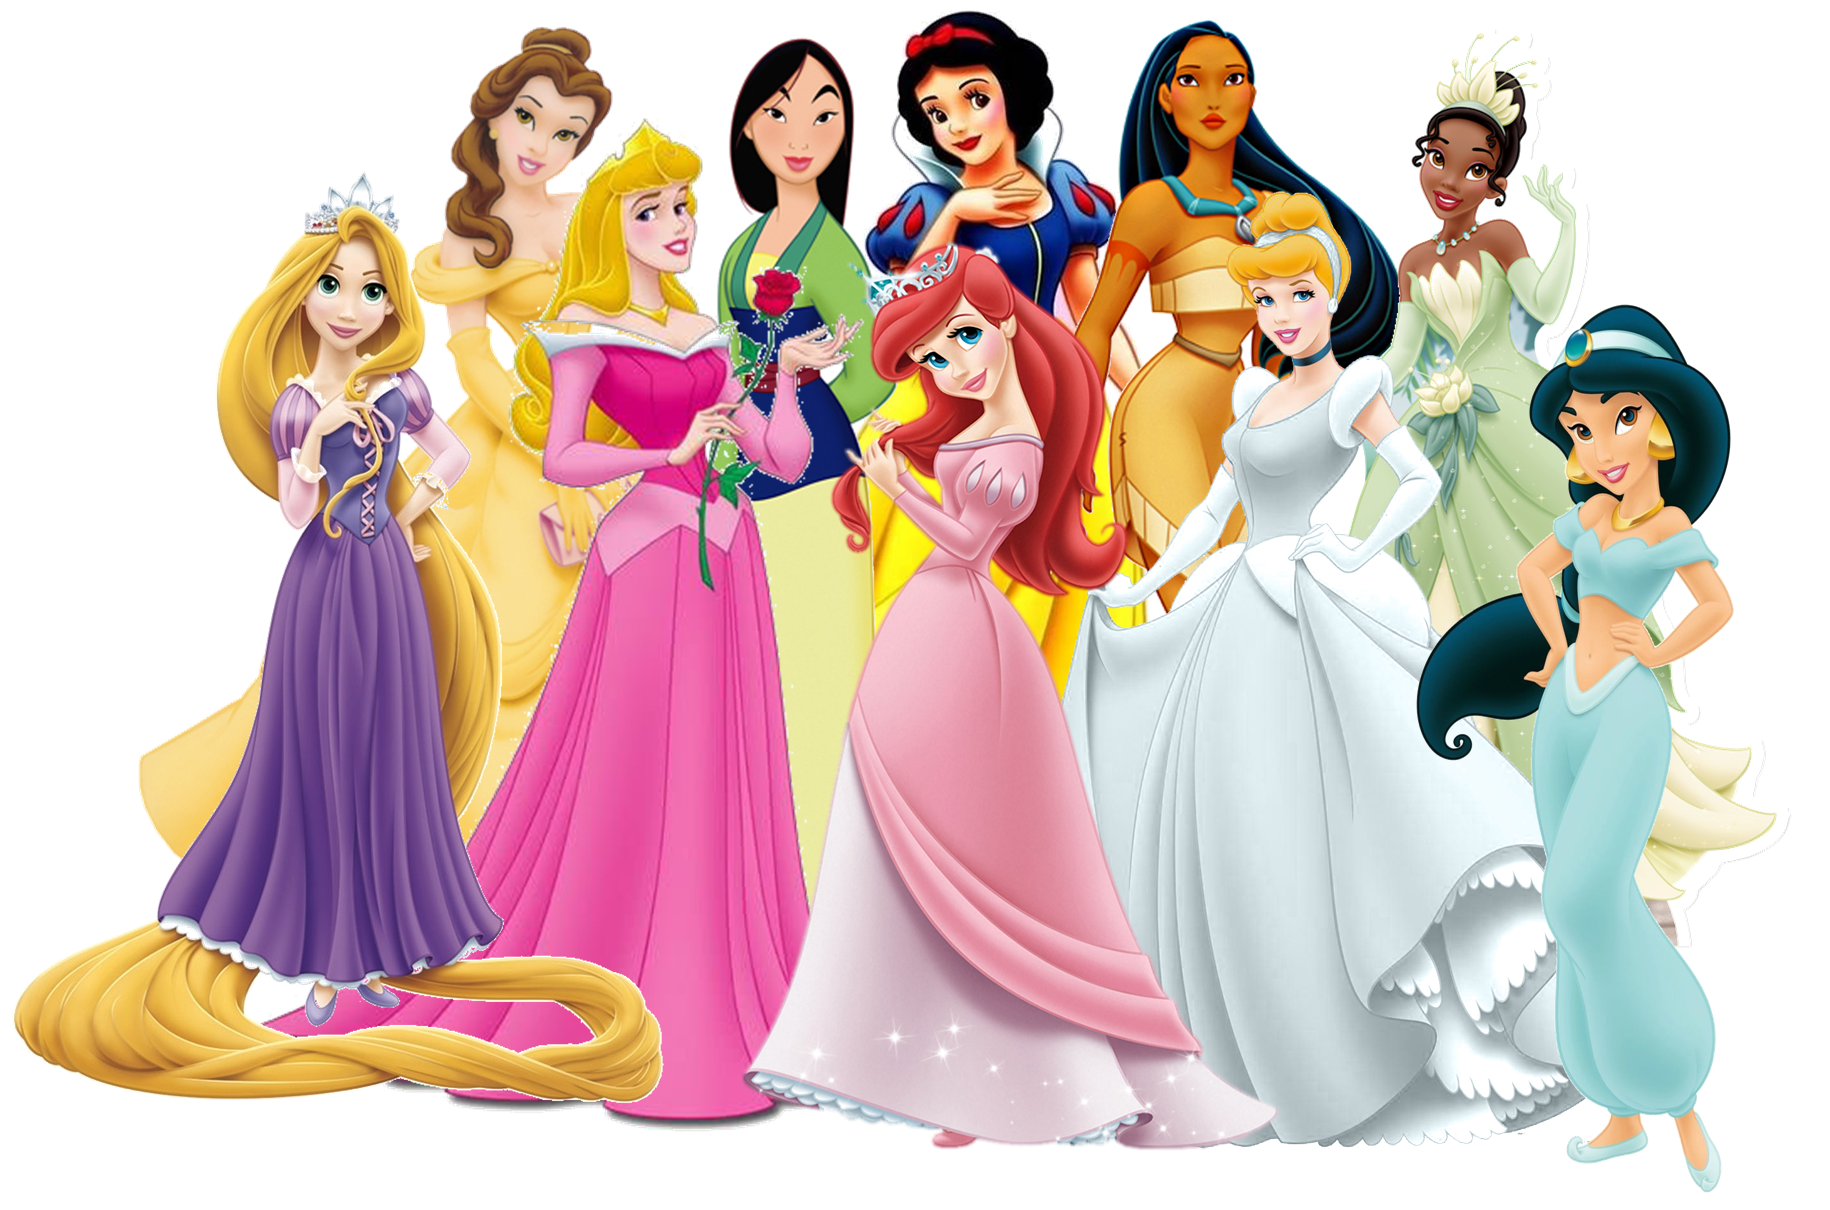  Disney Princess characters image Disney Princess characters wallpaper